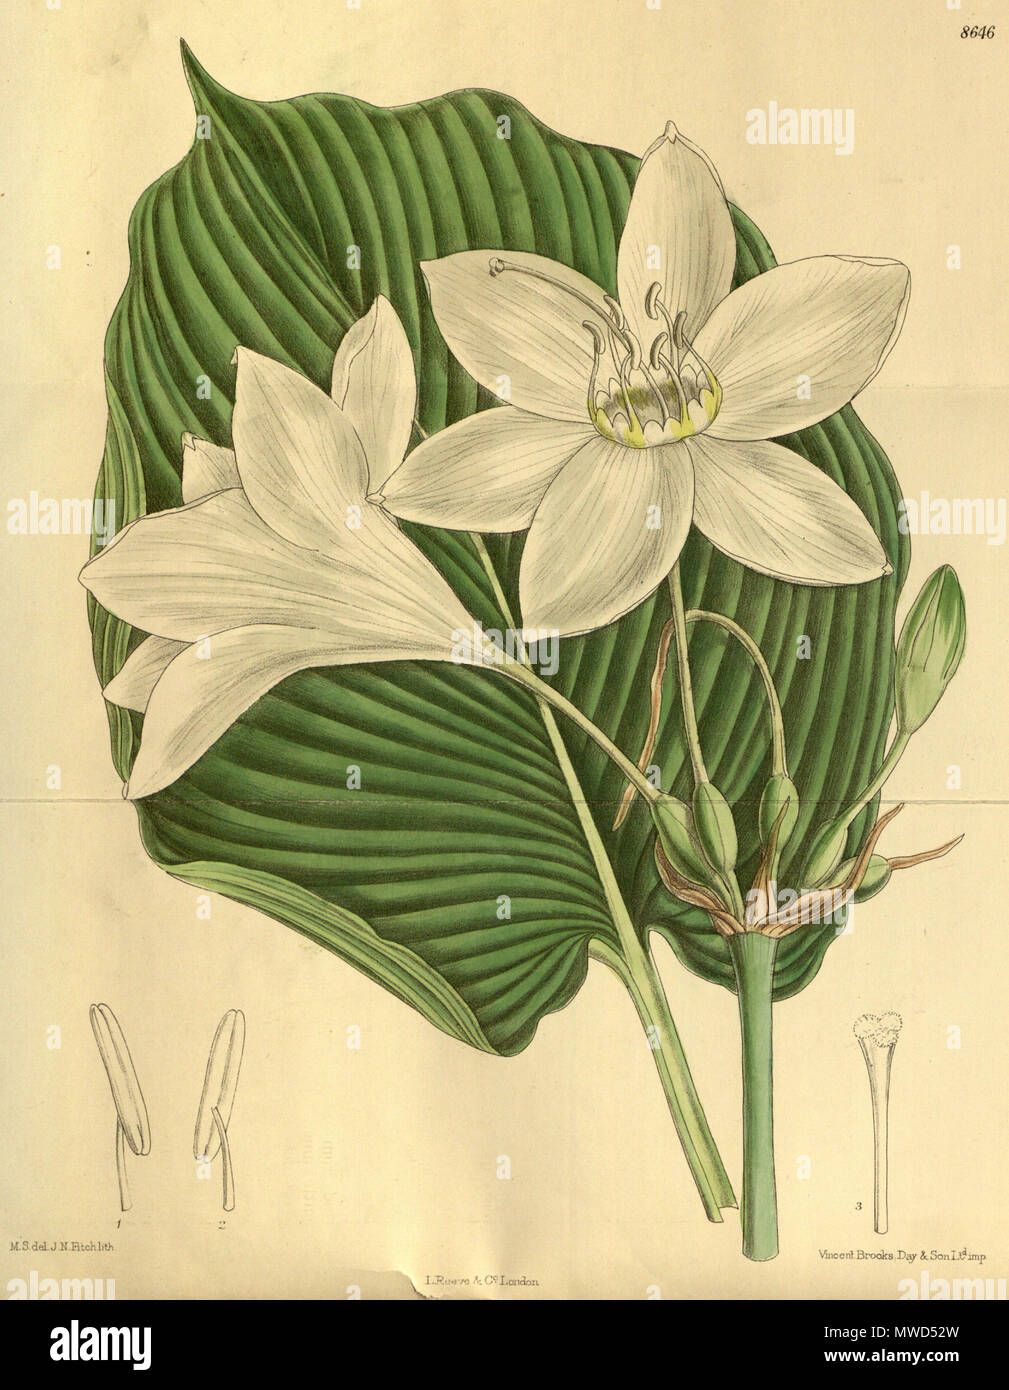 . Eucharis lowii (= Eucharis × grandiflora), Amaryllidaceae . 1916. M.S. del., J.N.Fitch lith. 197 Eucharis lowii 142-8646 Stock Photo